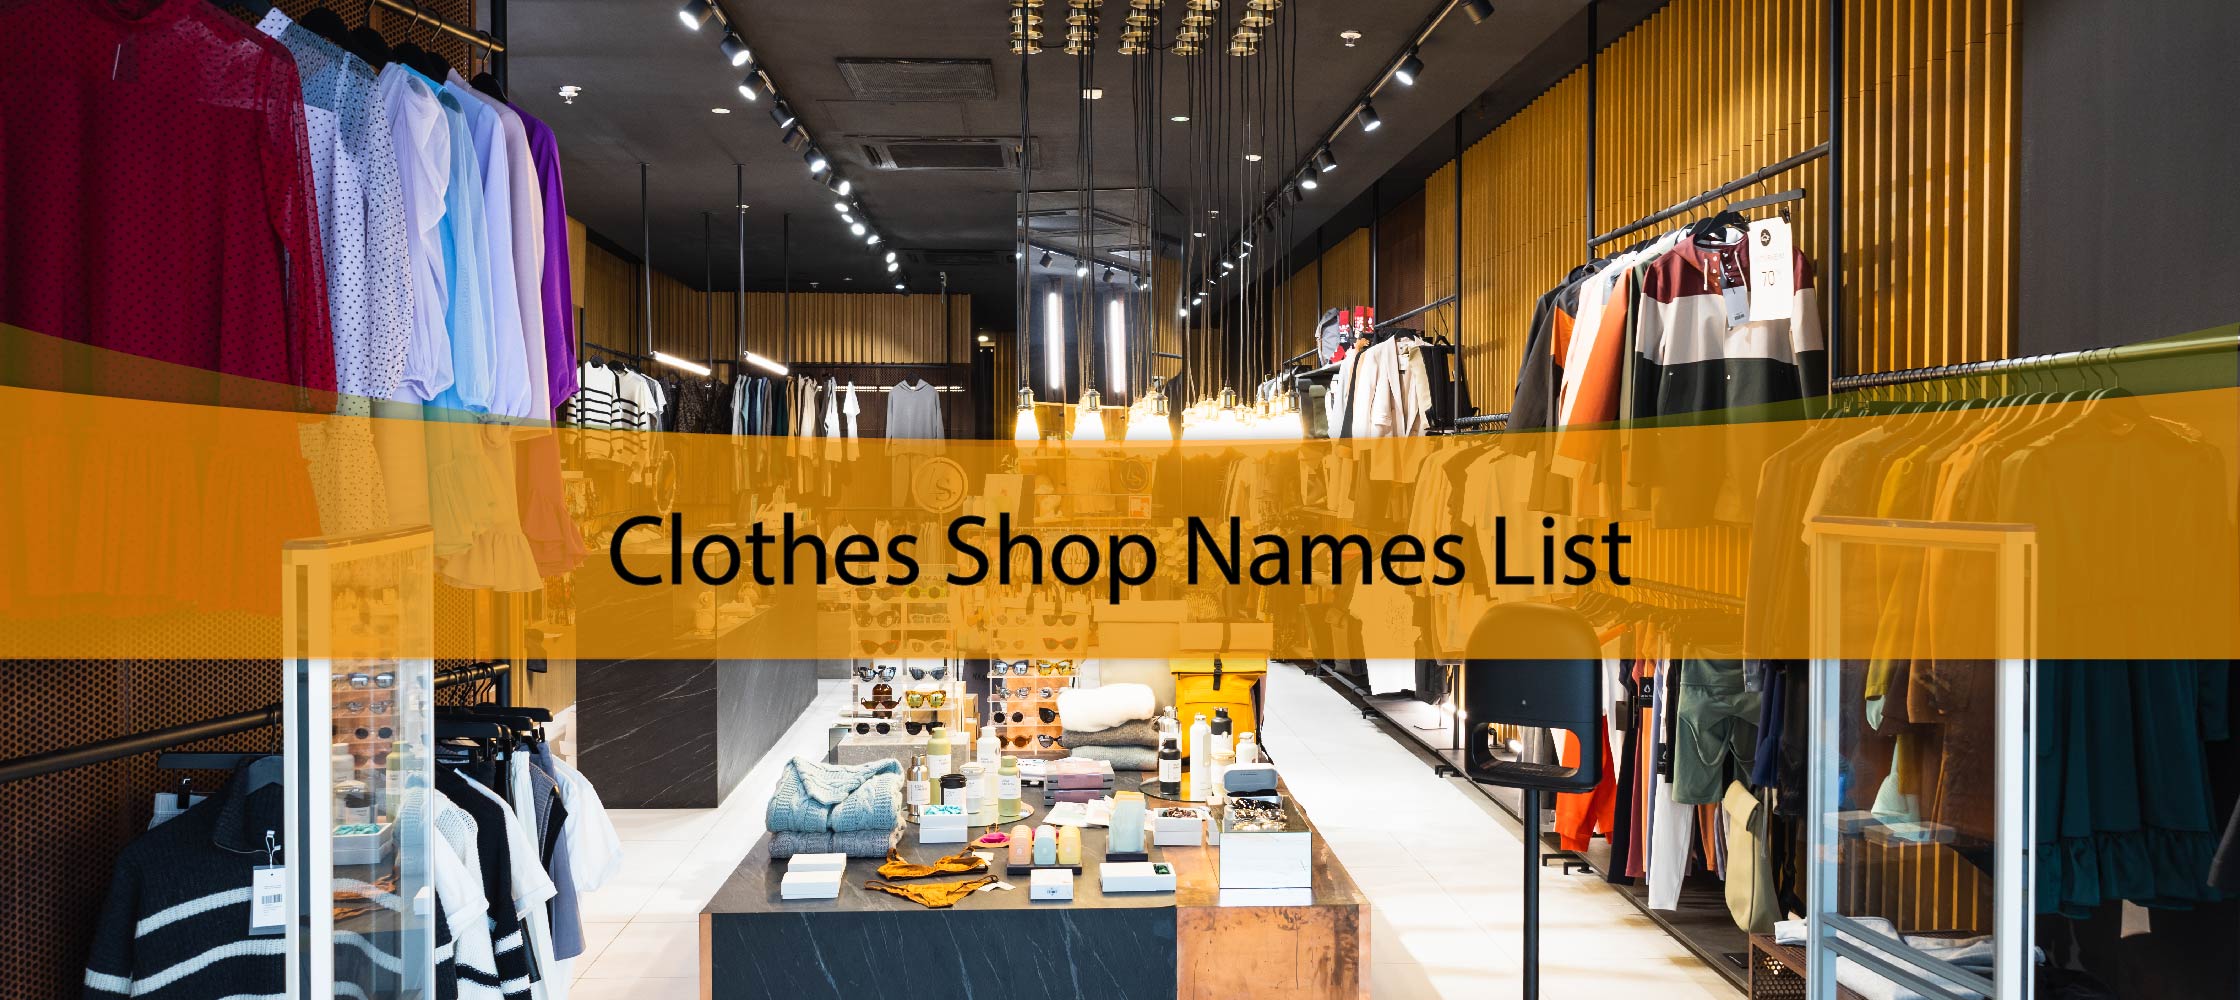 Clothes Shop Names List